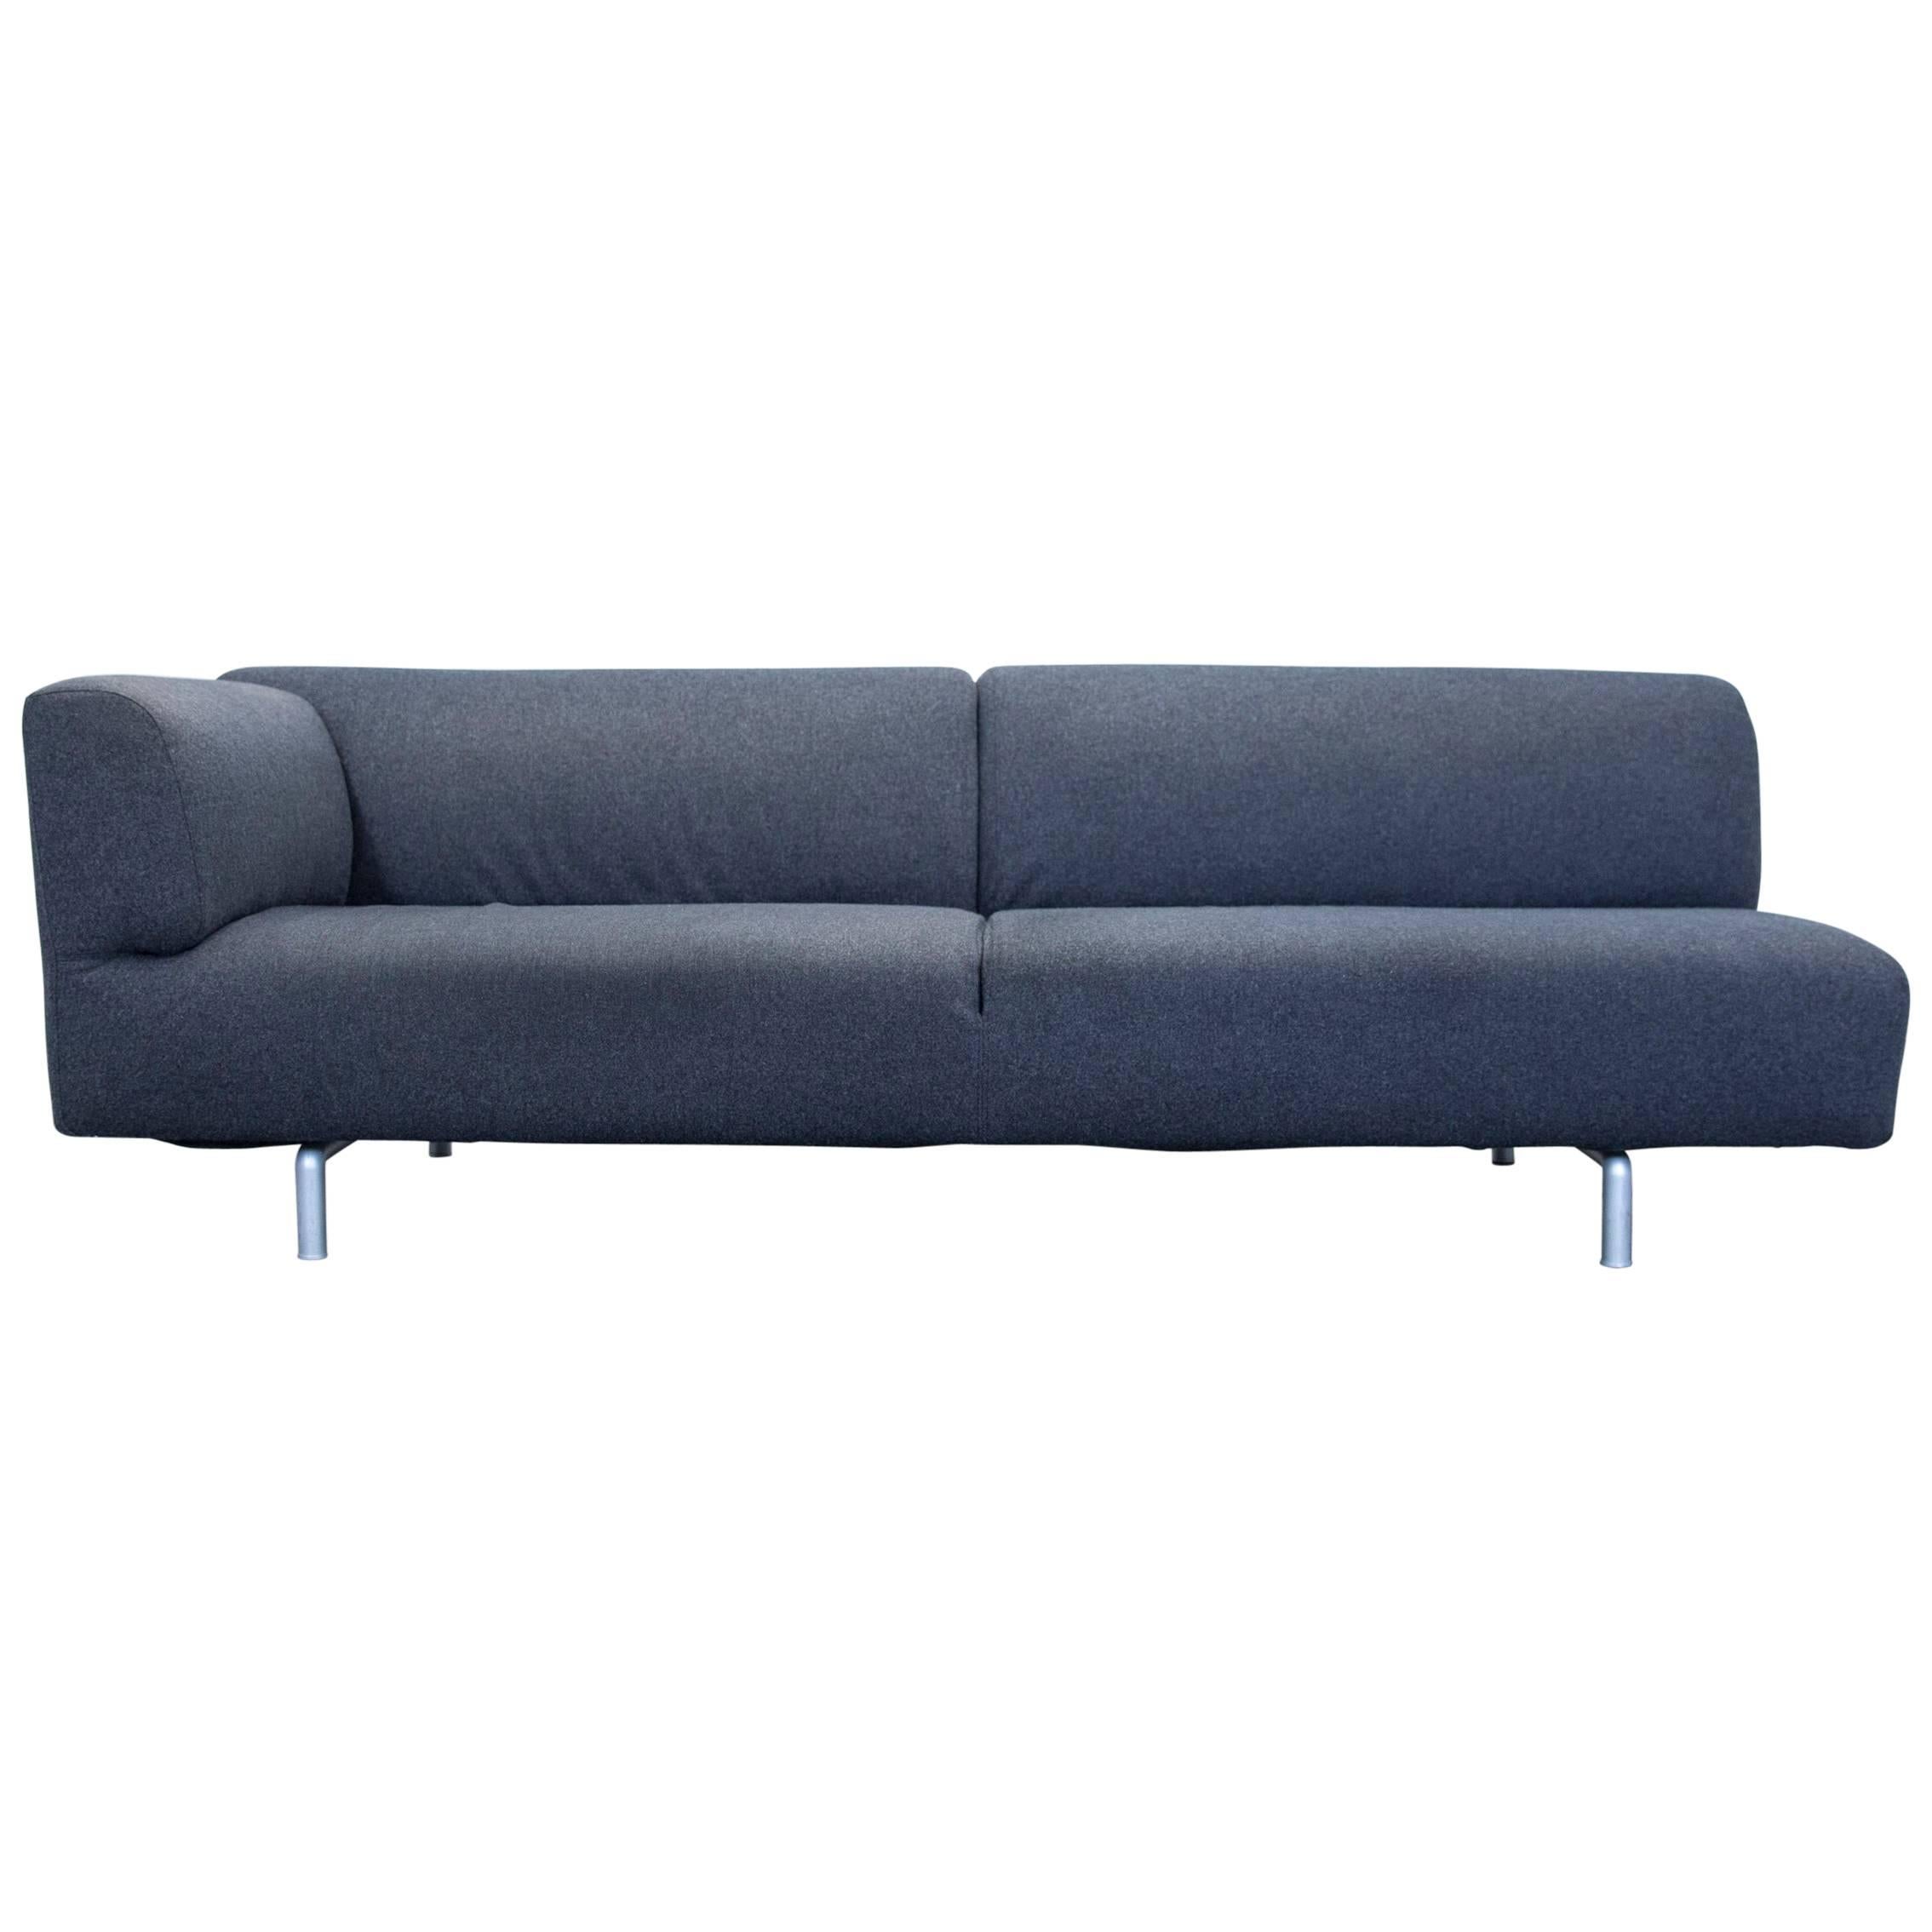 Cassina Met Designer Sofa Anthrazit Grey Three-Seat Couch Modern